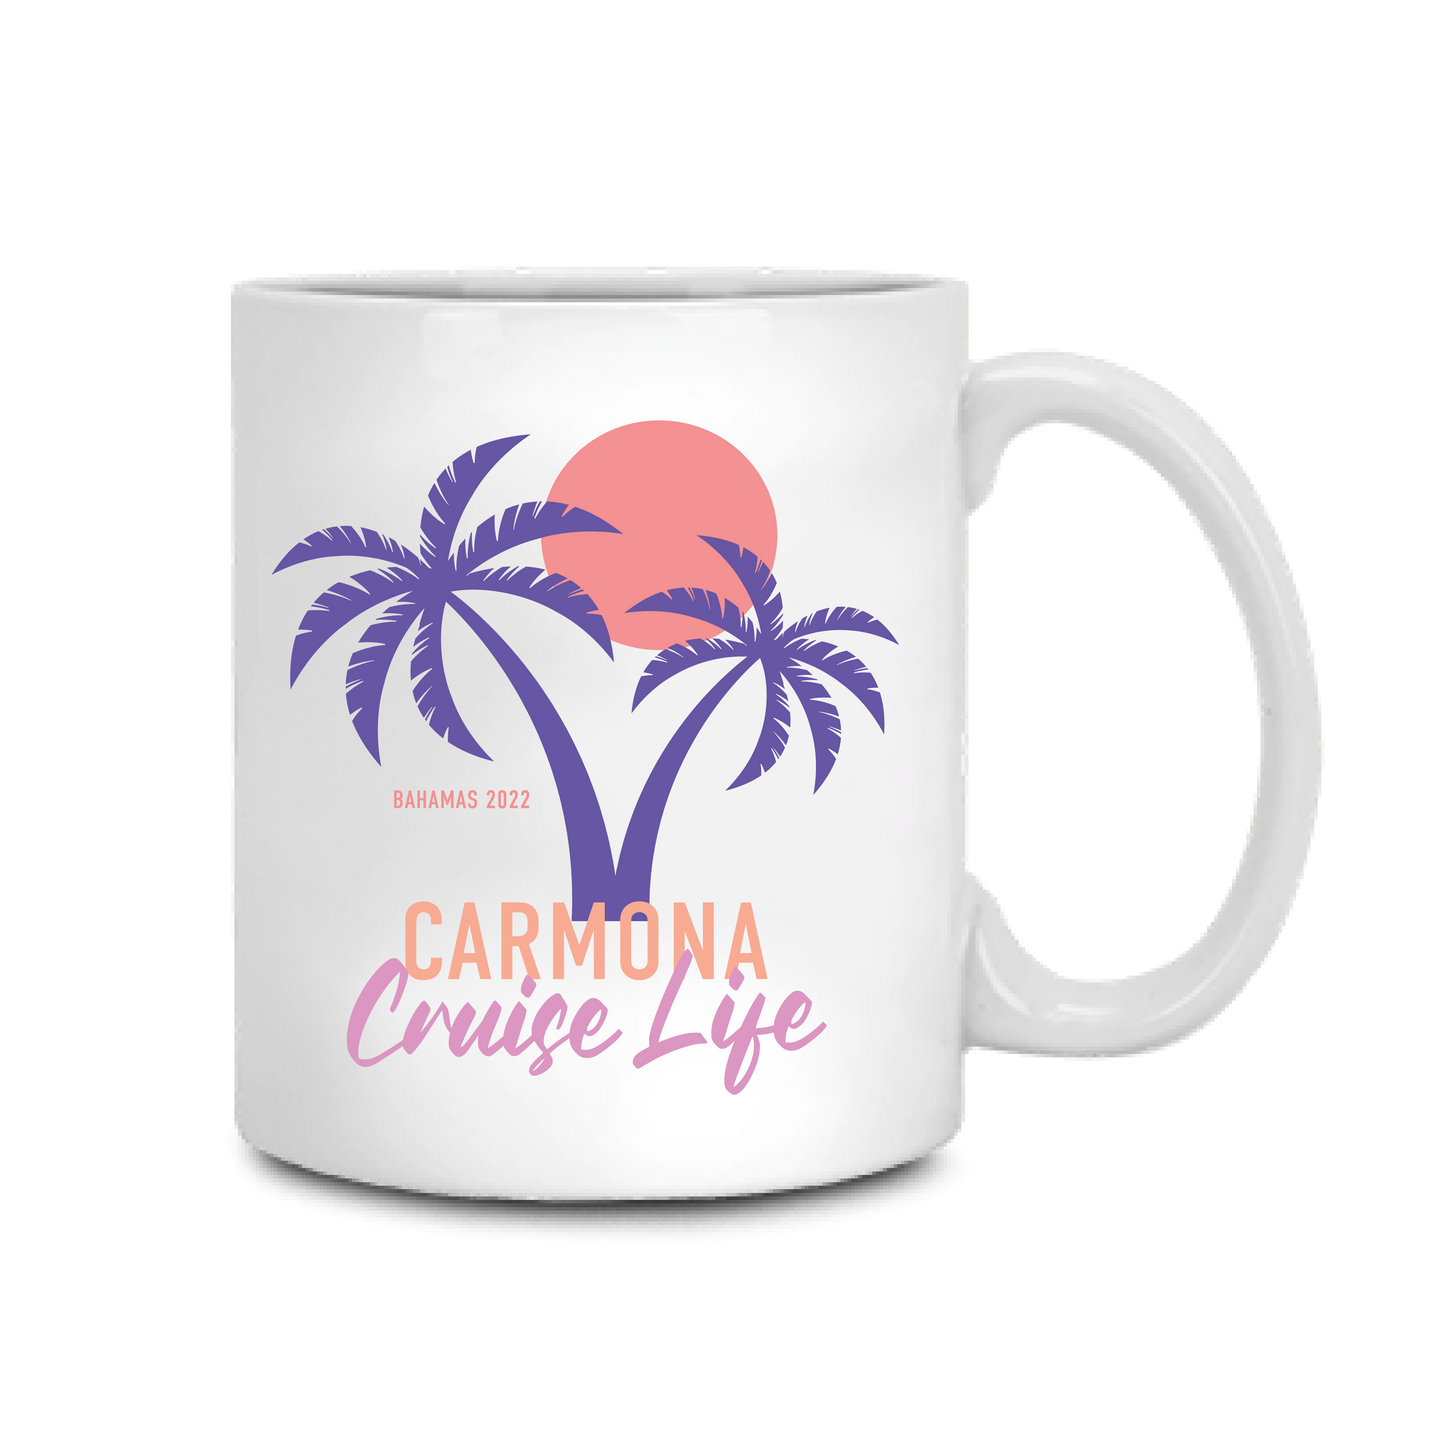 Cruise Life - Personalized Coffee Mug